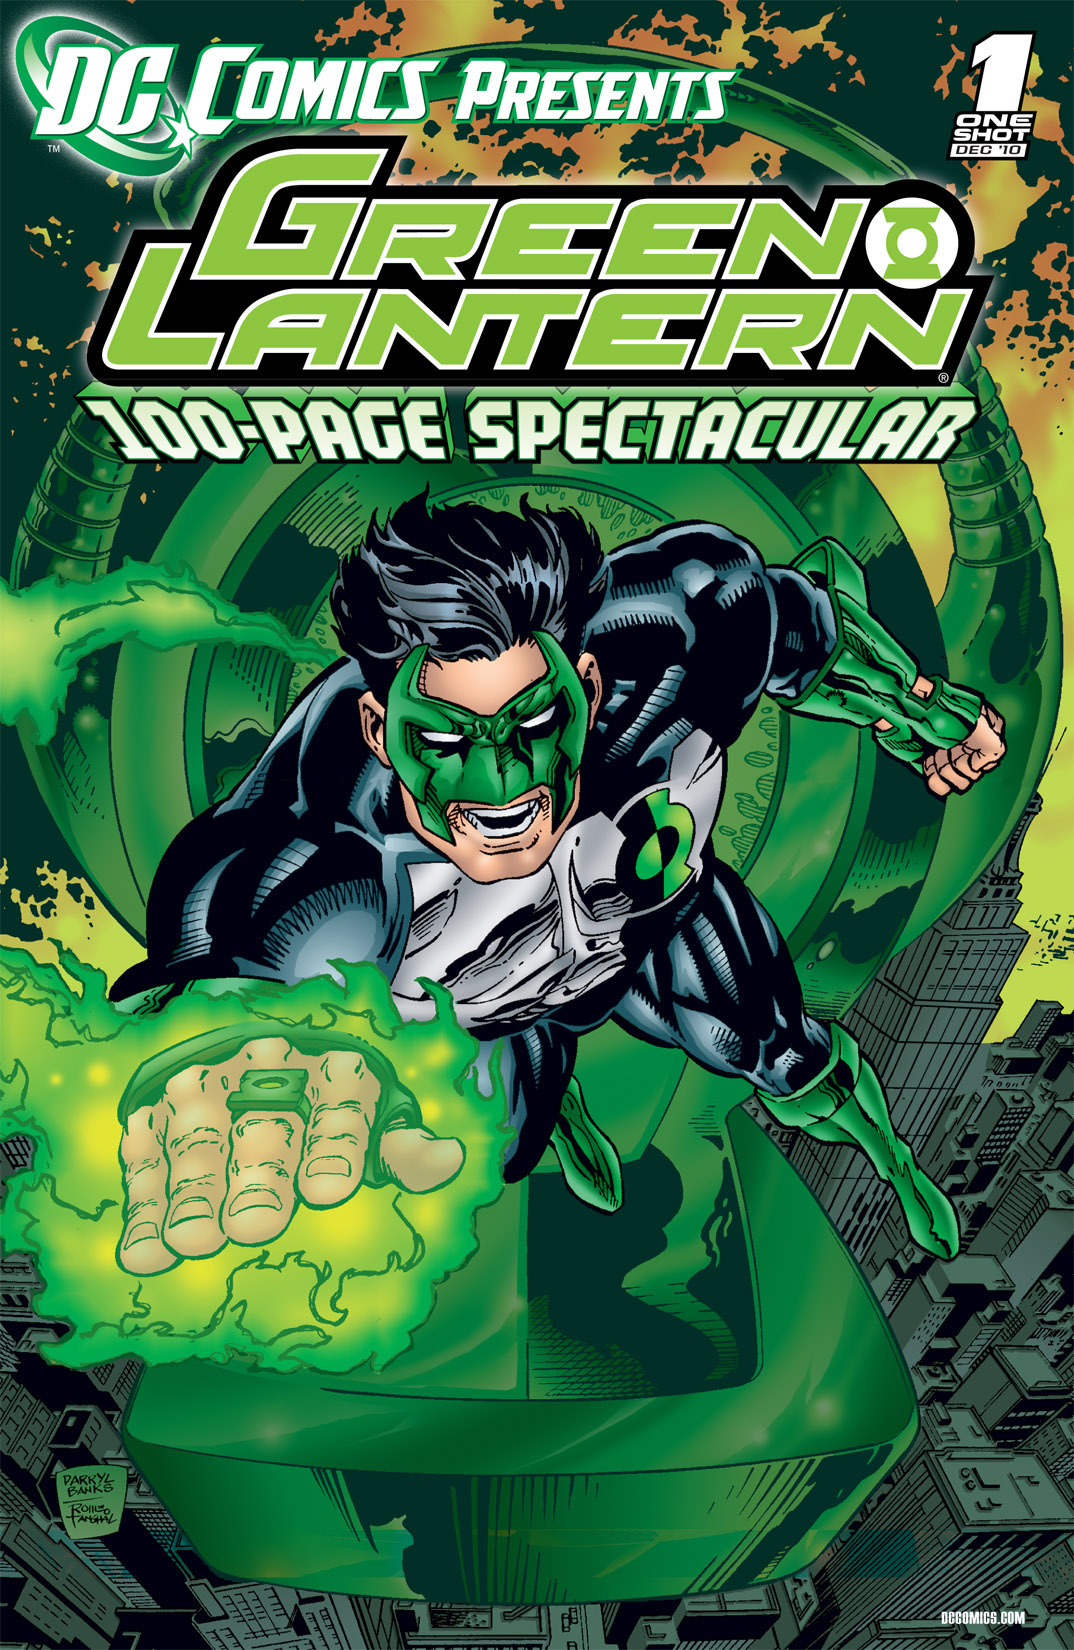 DC Comics Presents: Green Lantern (2010-) #1 preview images